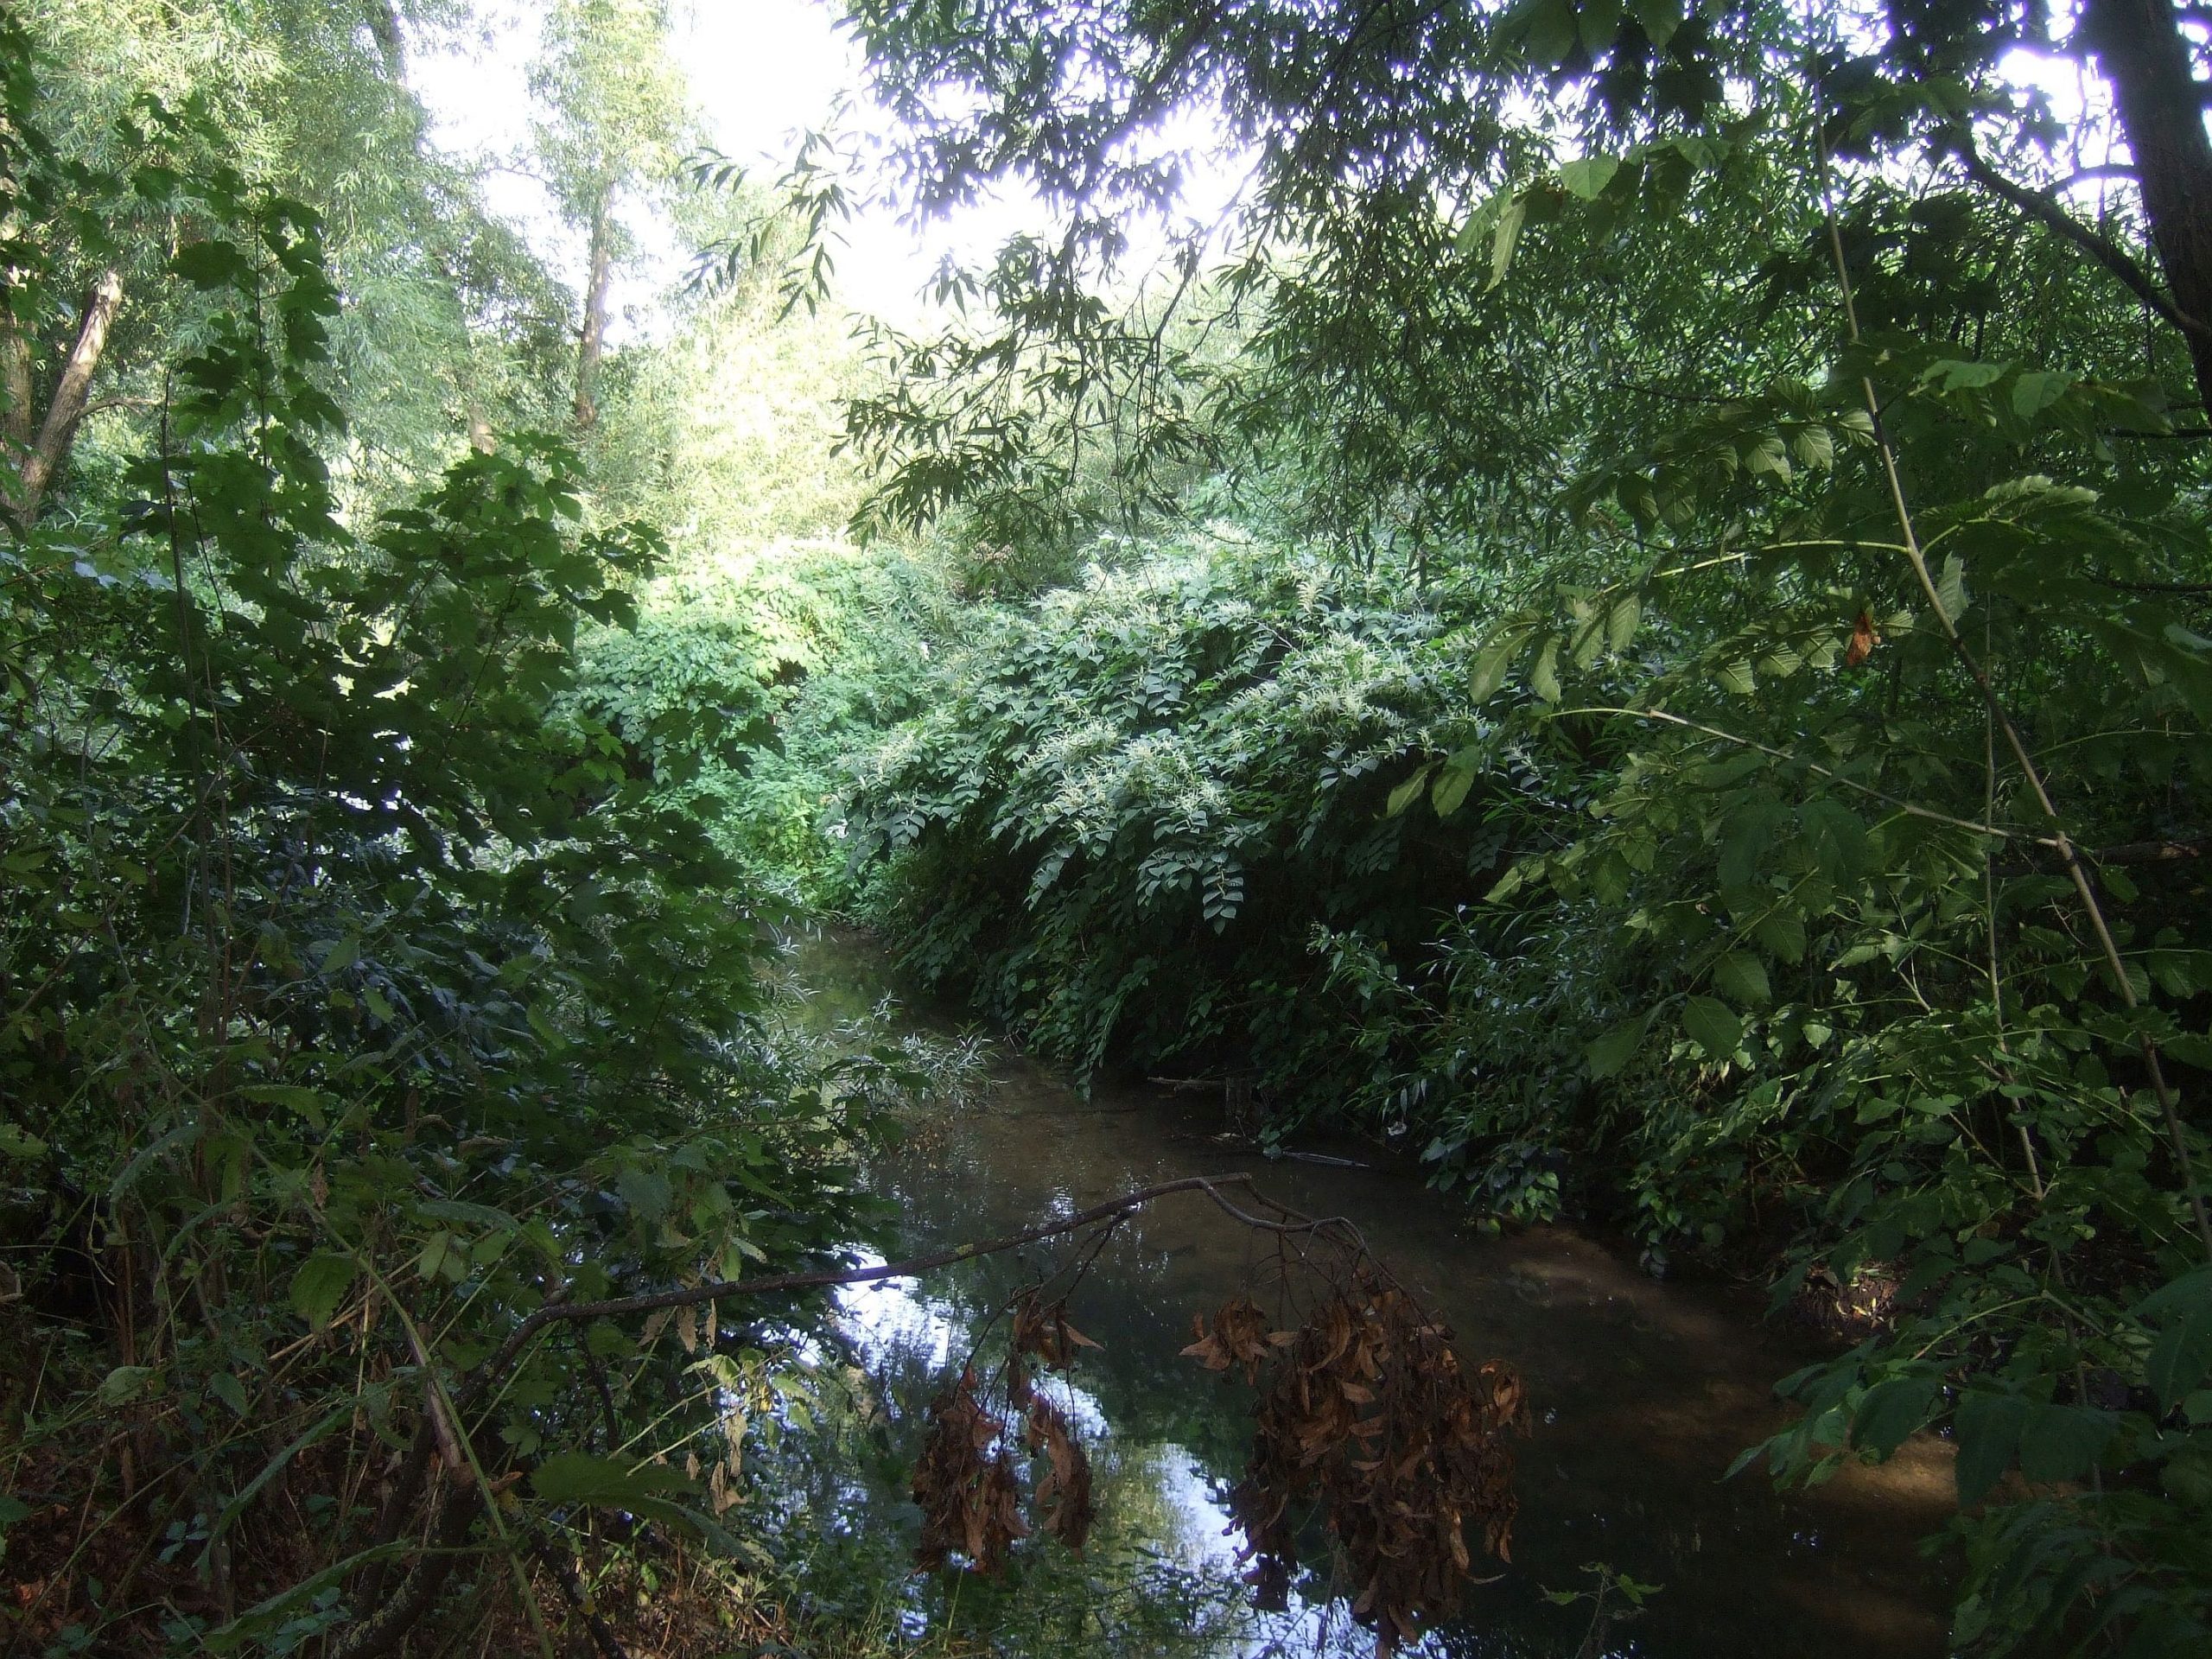 knotweed along river